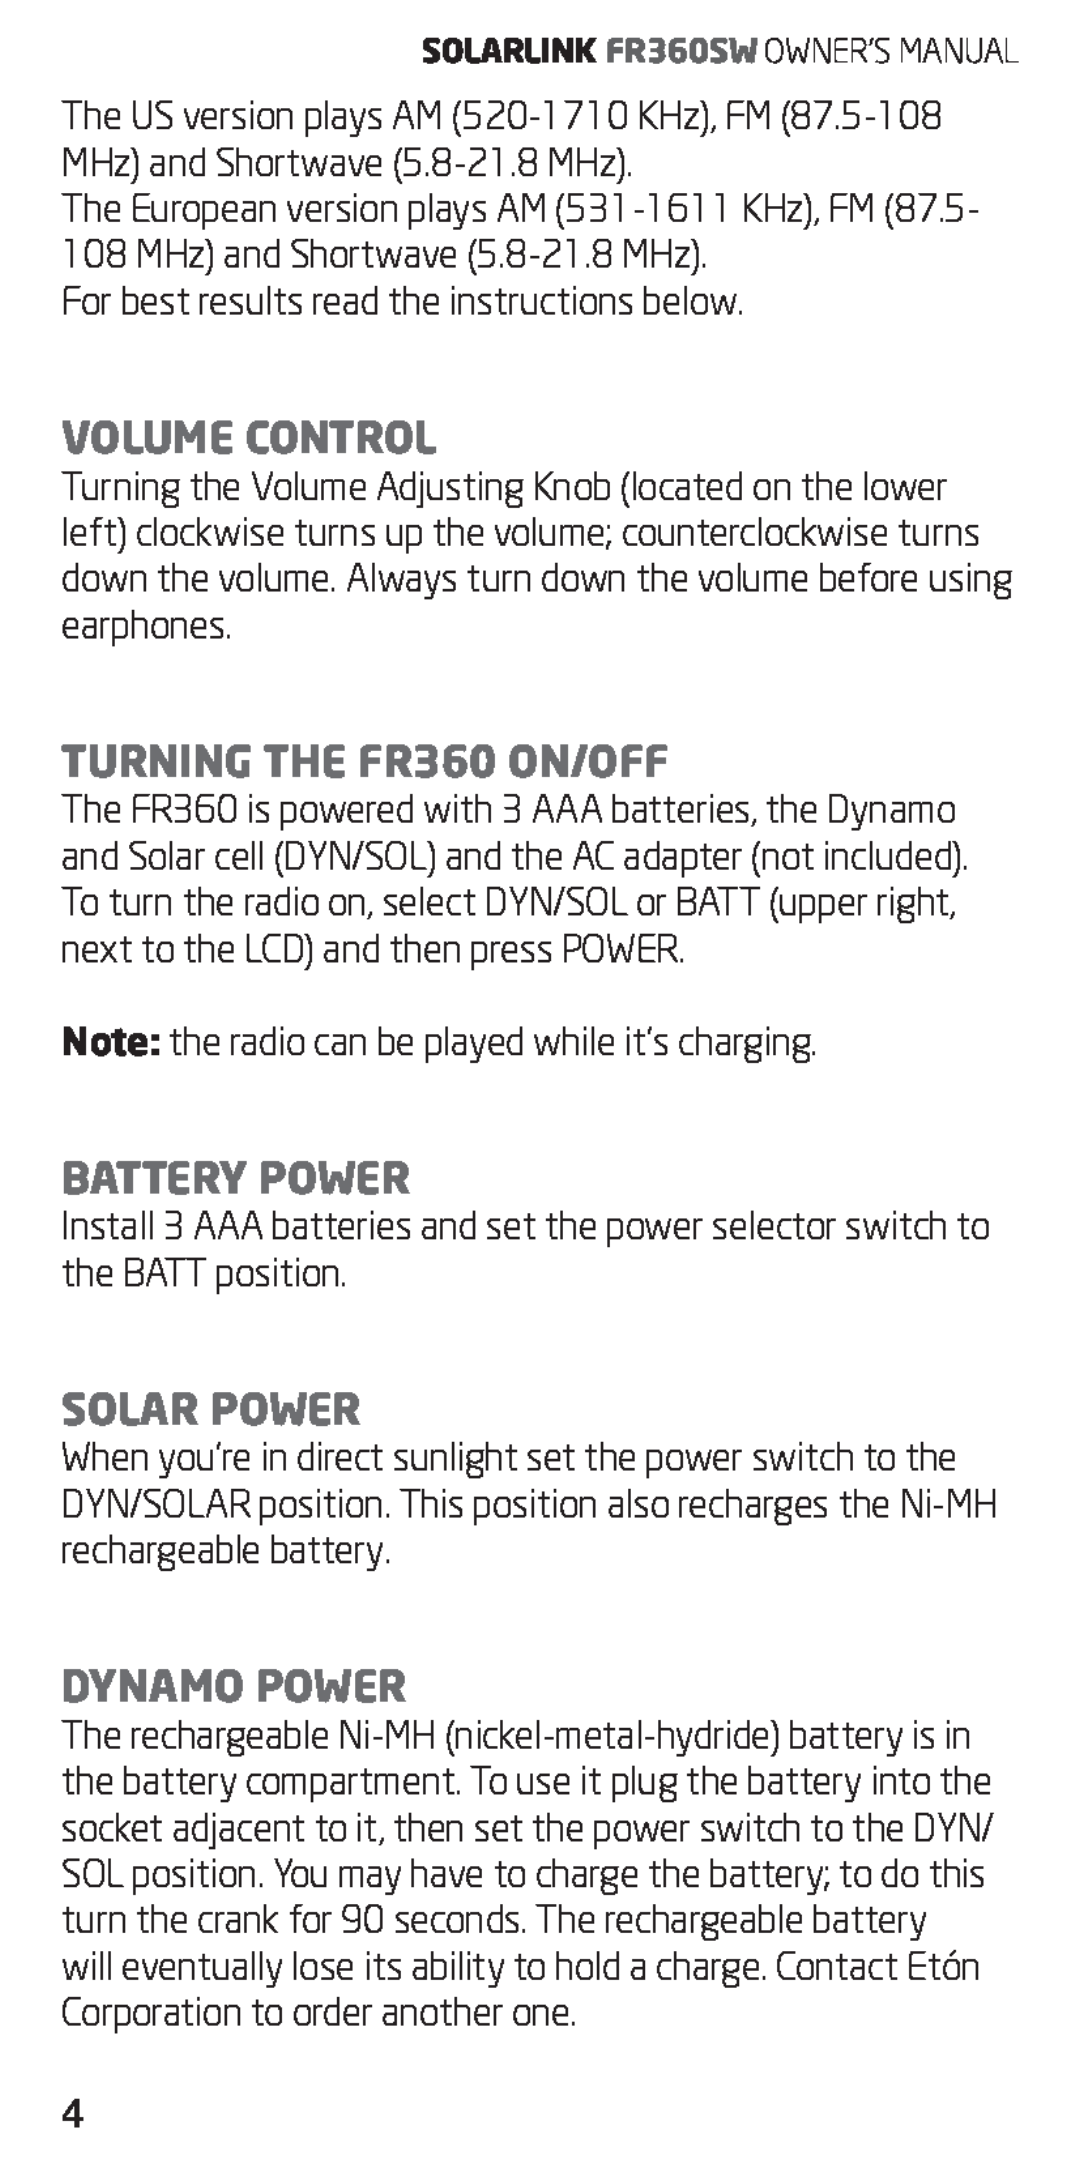 Eton owner manual Volume Control, TURNING THE FR360 ON/OFF, Battery Power, Solar Power, Dynamo Power 